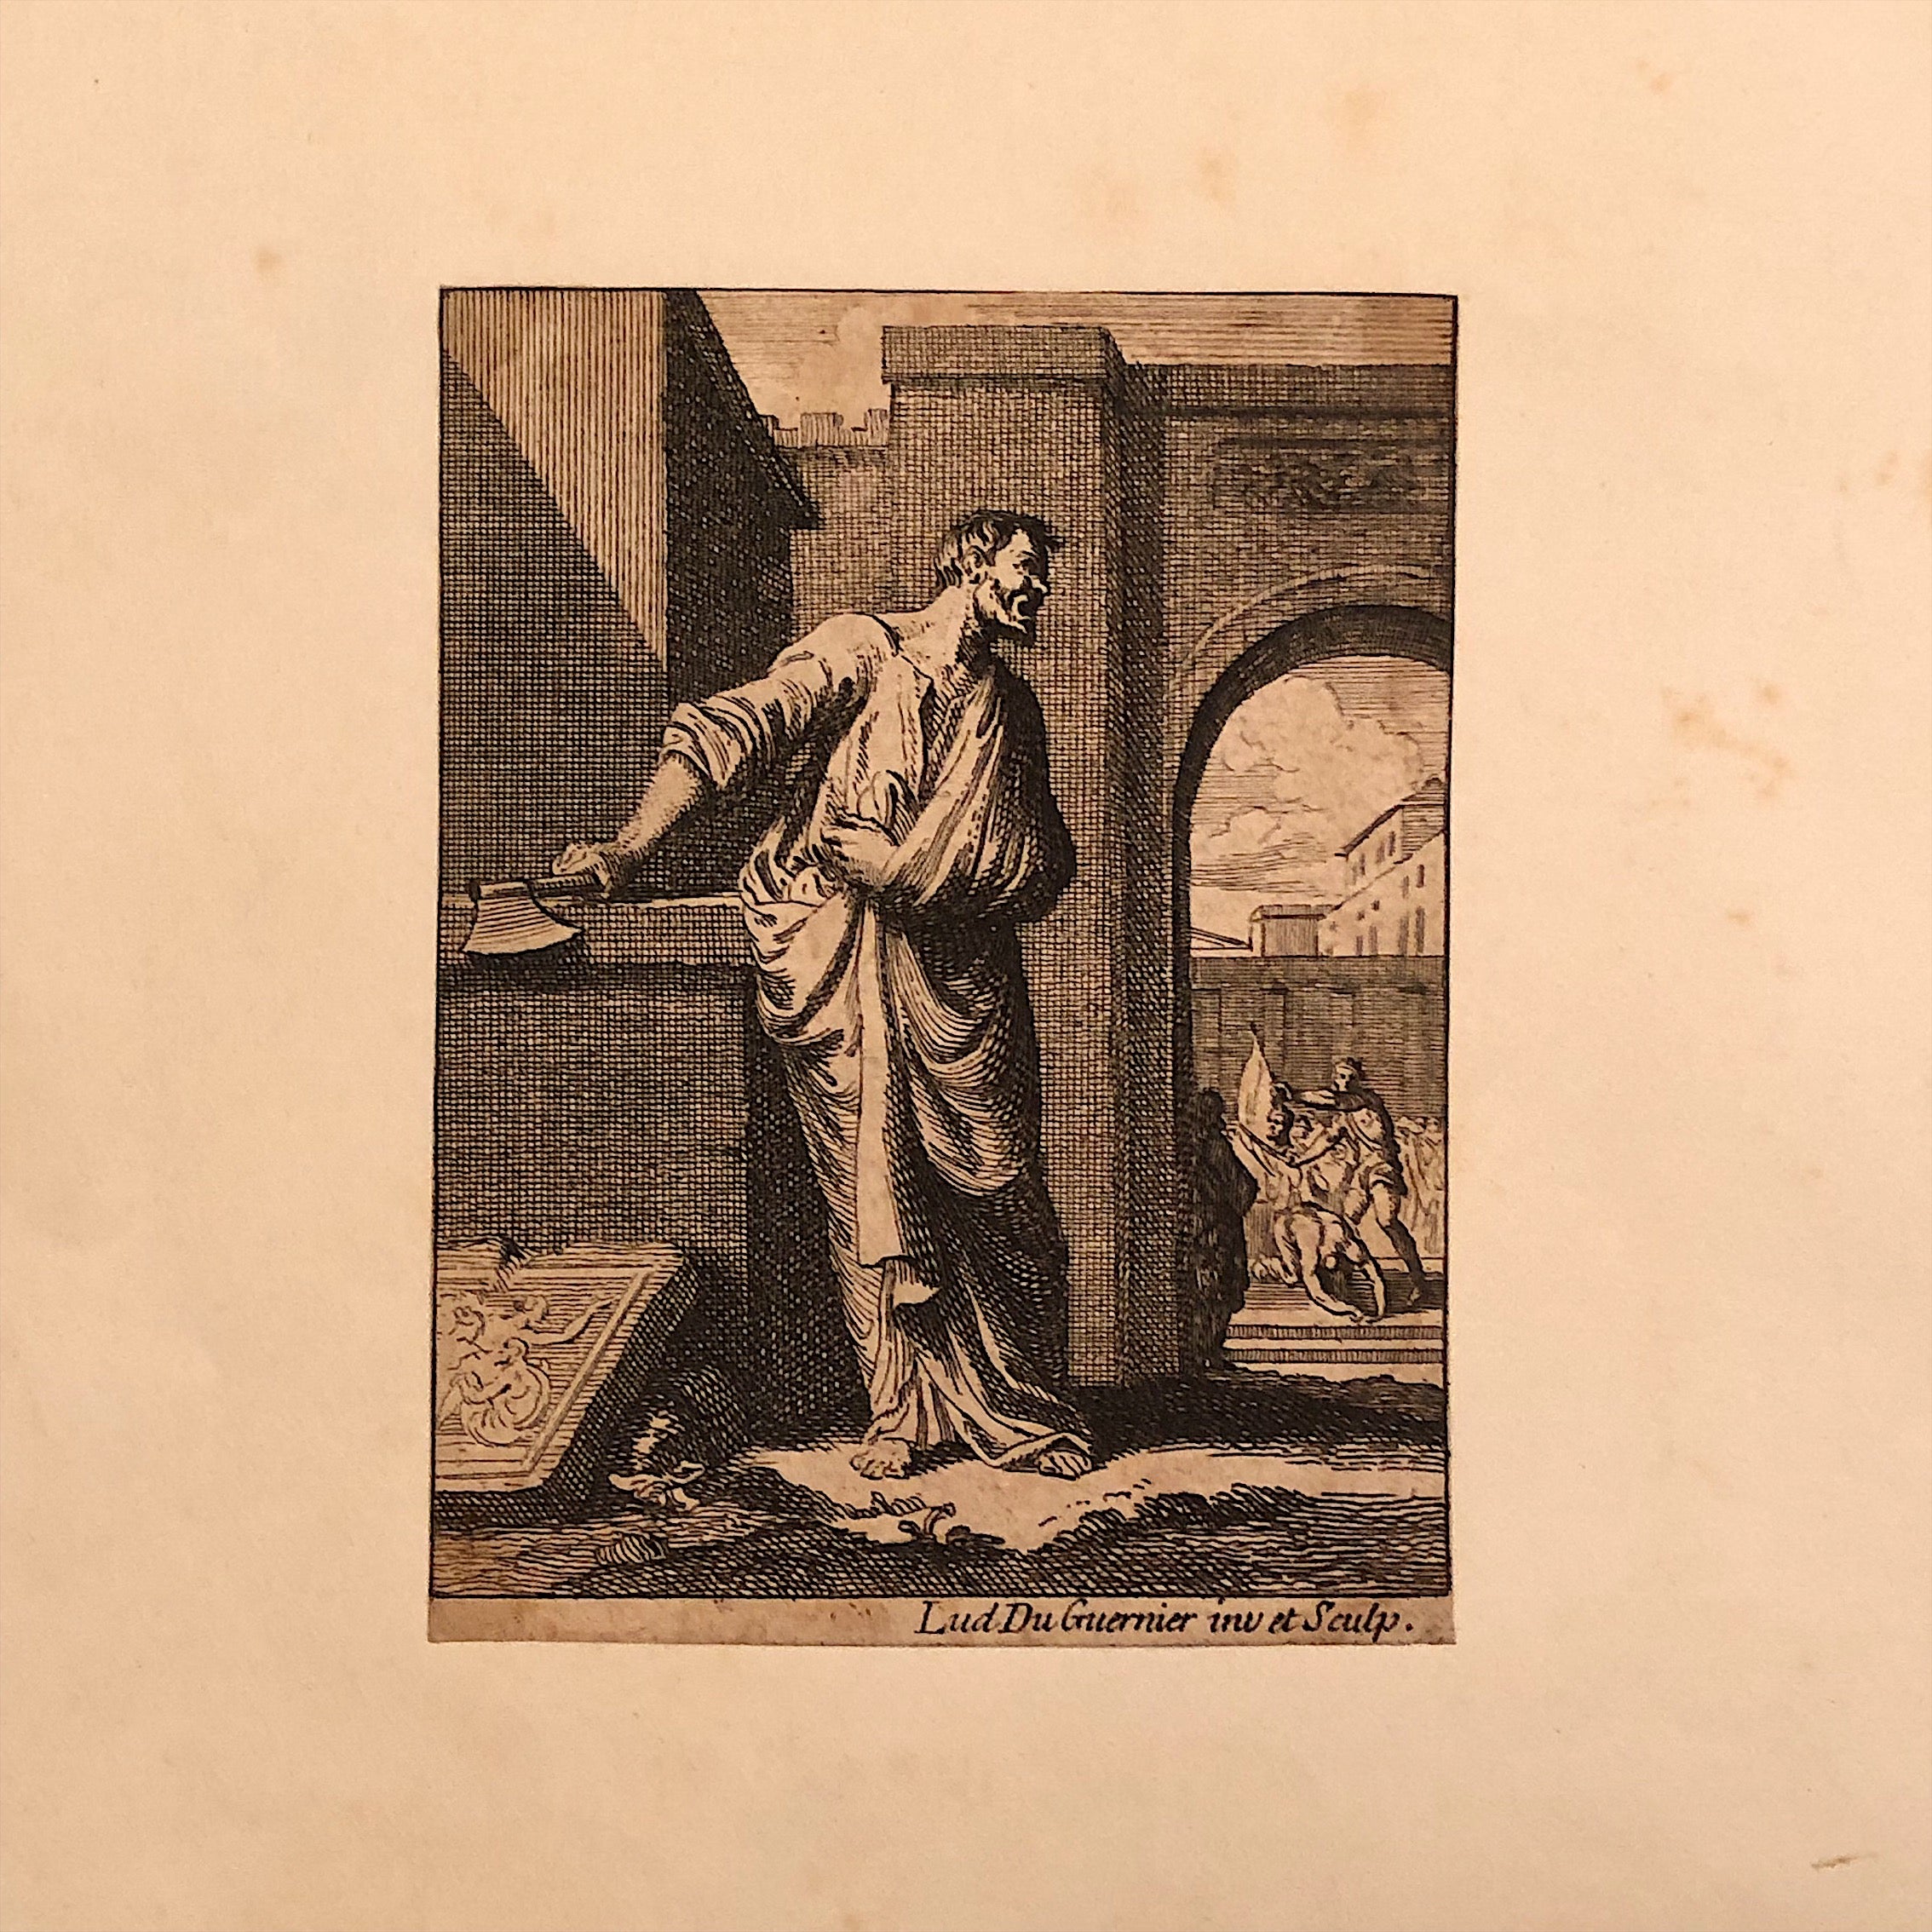 Louis Du Guernier Etching of Beheading and Man with an Axe -Early 1700s - Morbid Print - Rare European Engraving